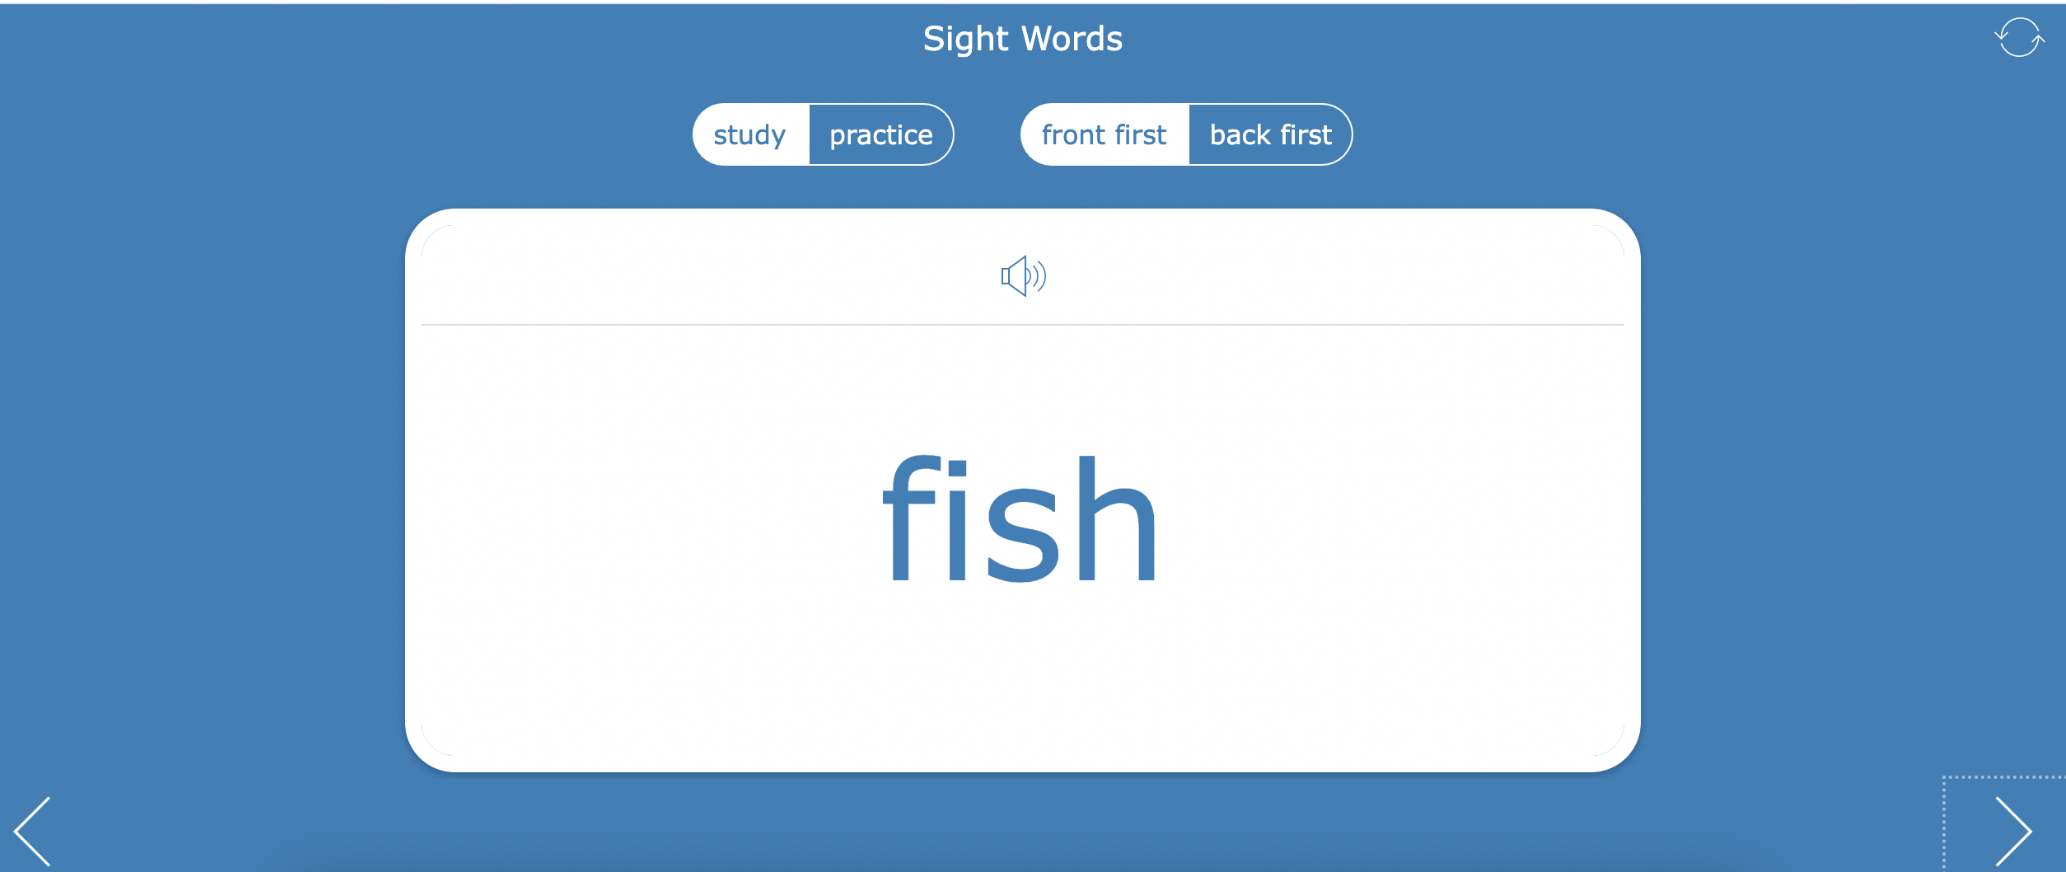 FlashCard sight words